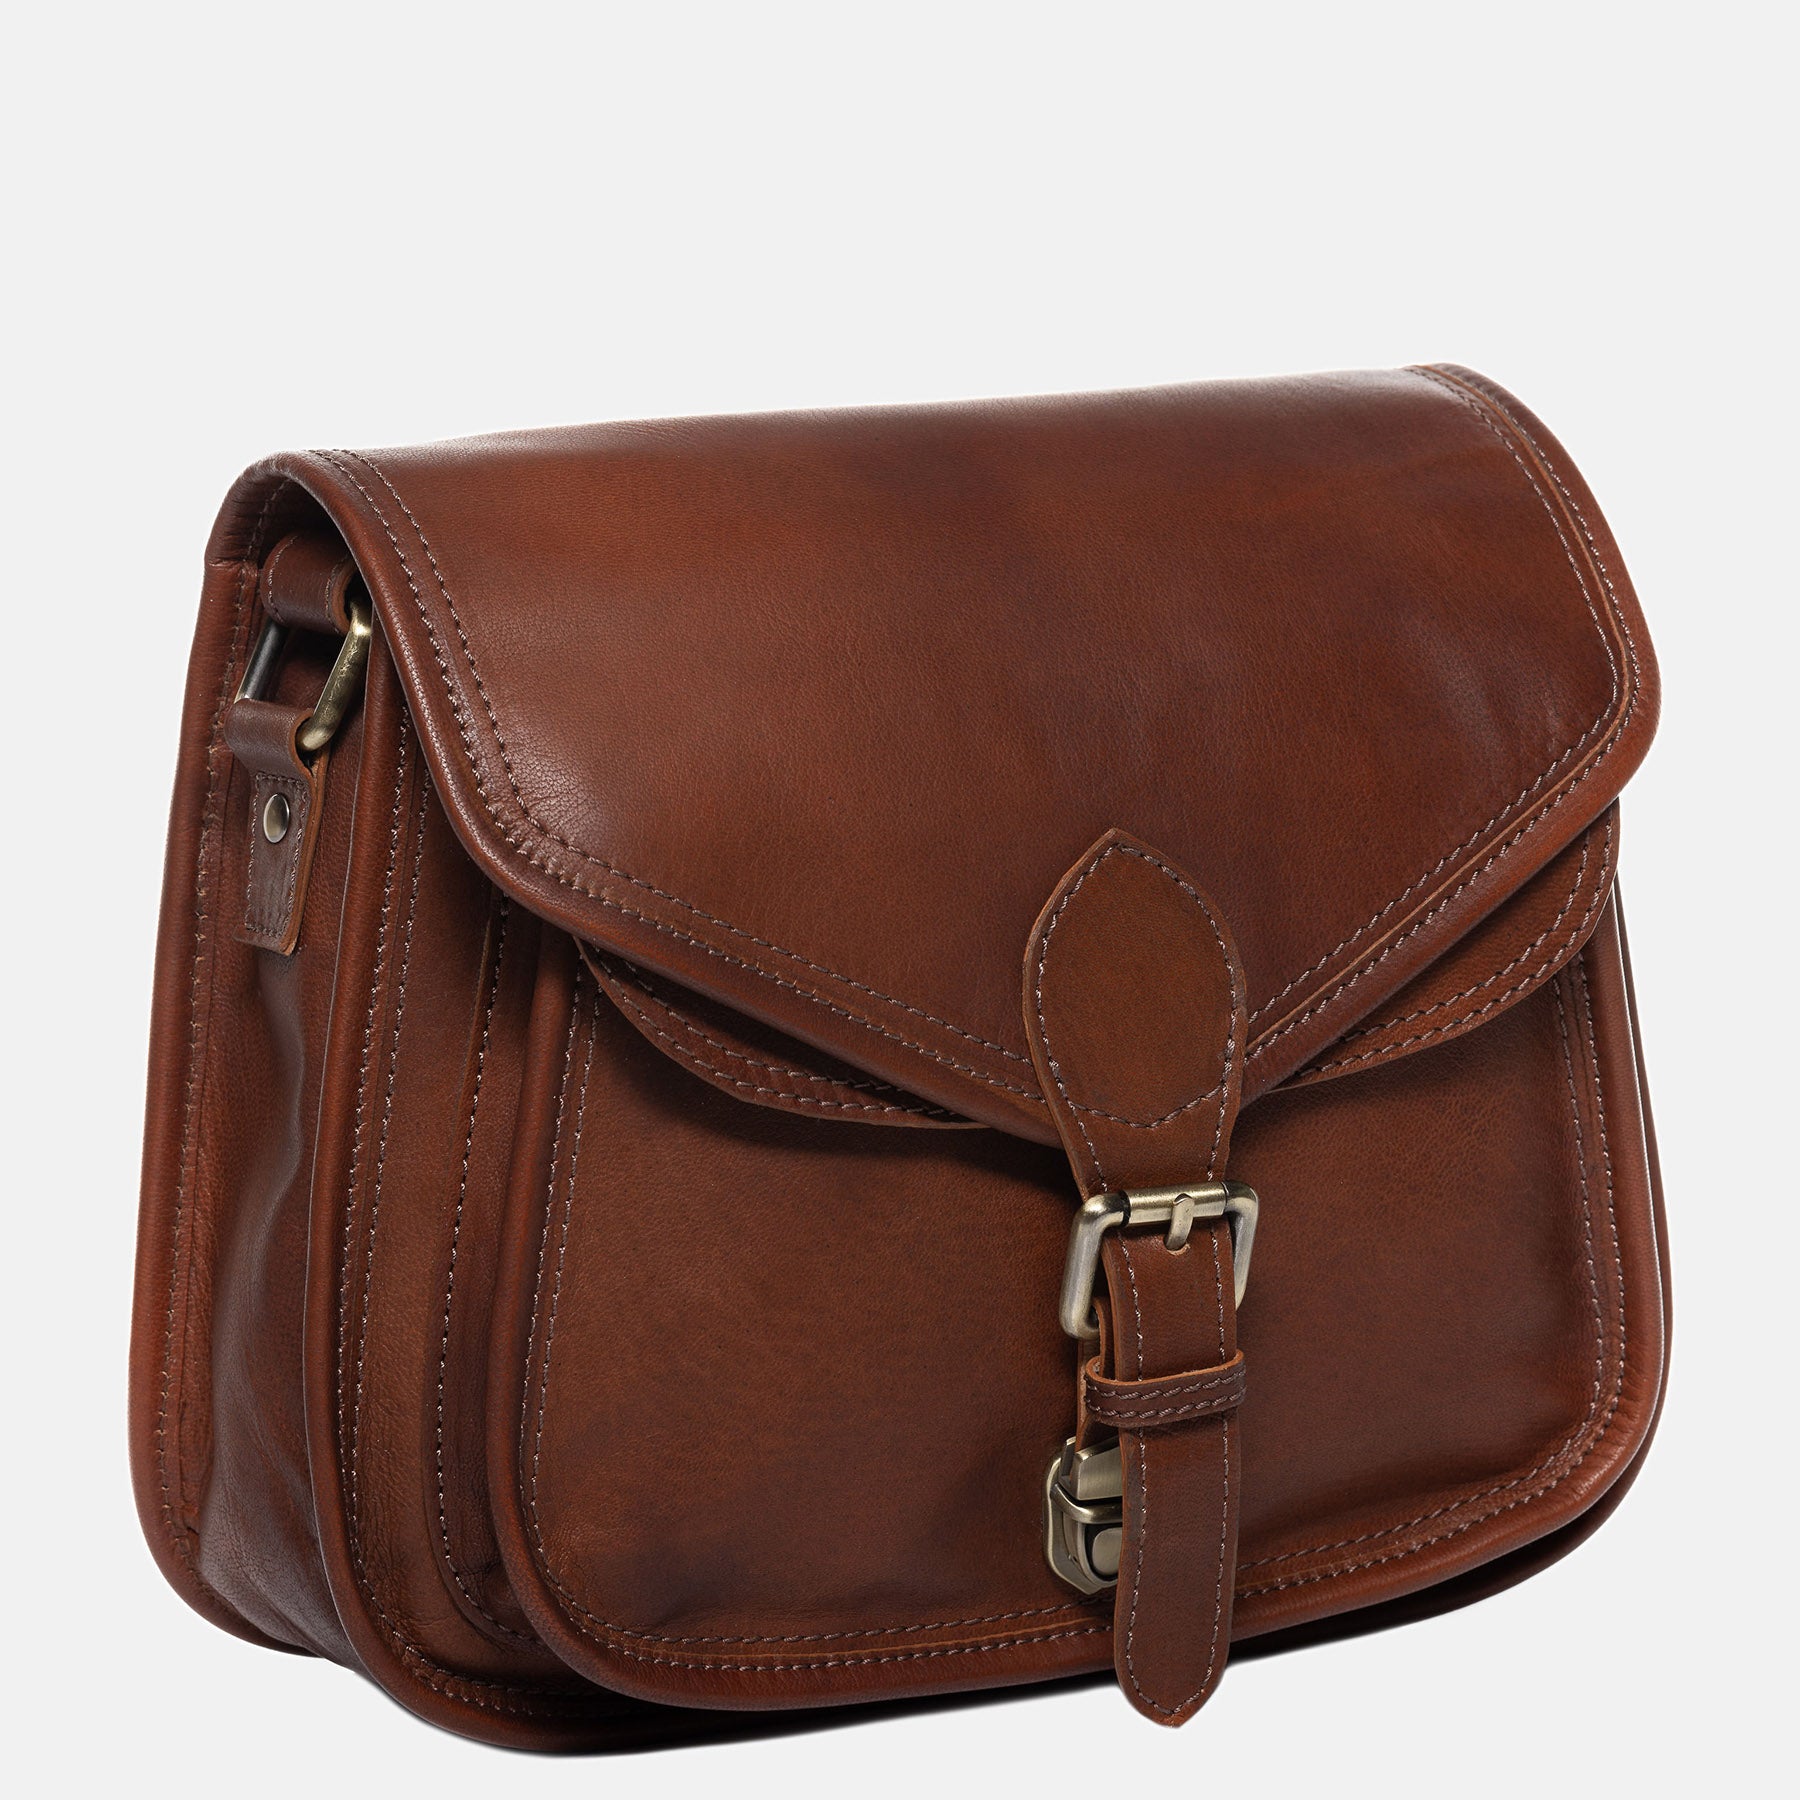 Shoulder bag LORI smooth leather light brown